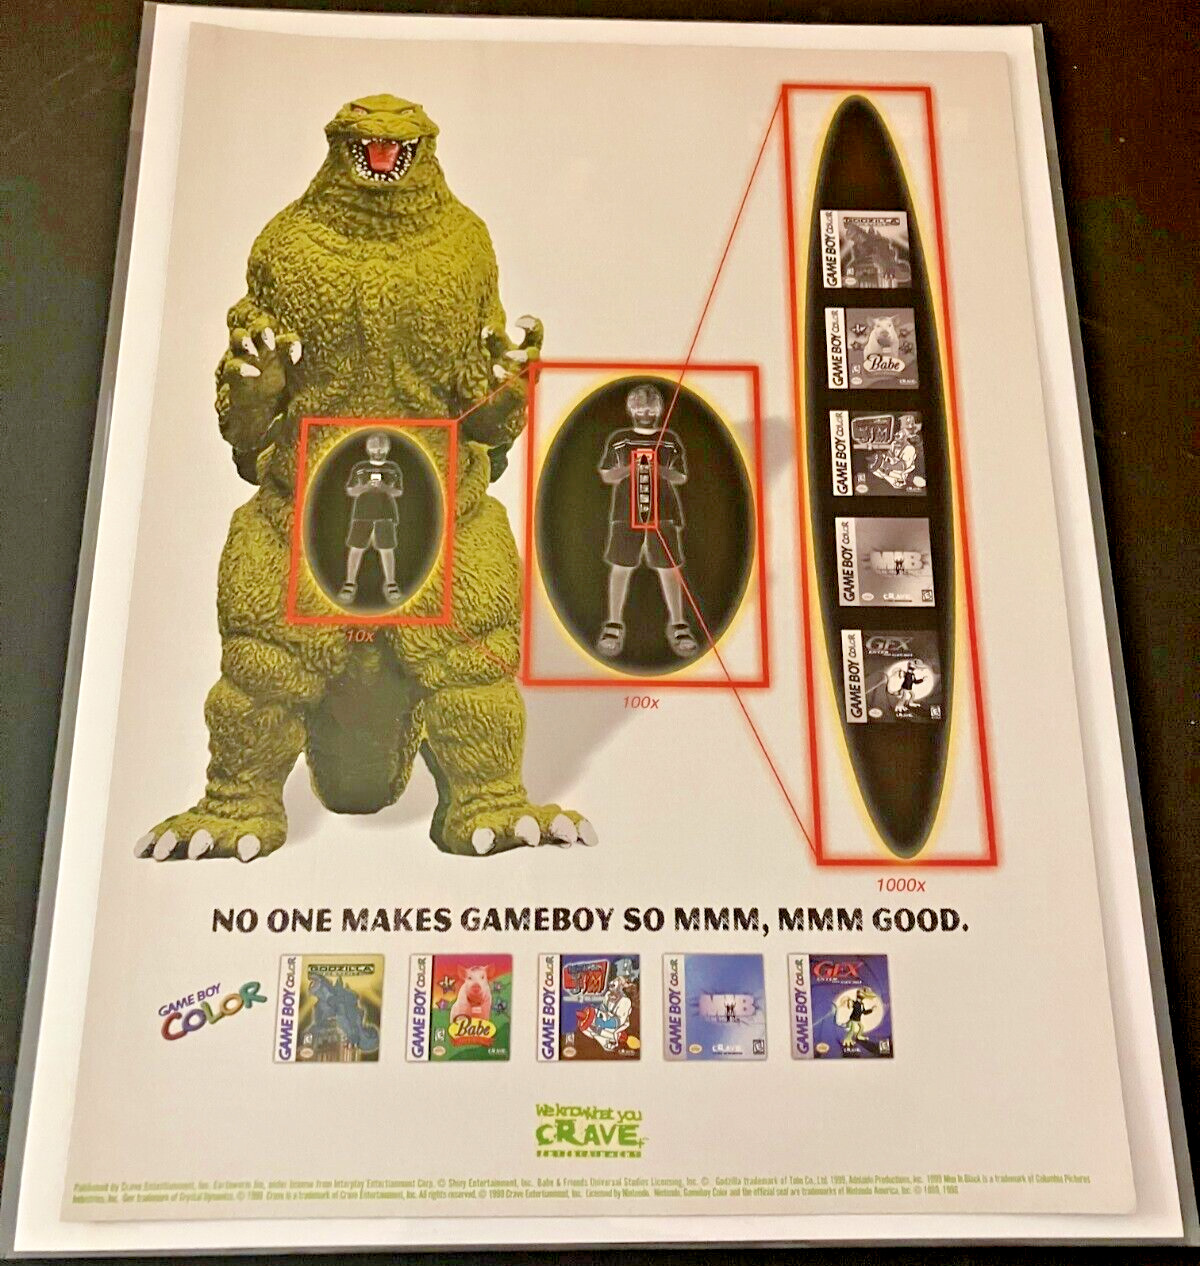 Godzilla / Crave / GBC - Vintage 1999 Gaming Print Ad / Poster / Wall Art - MINT